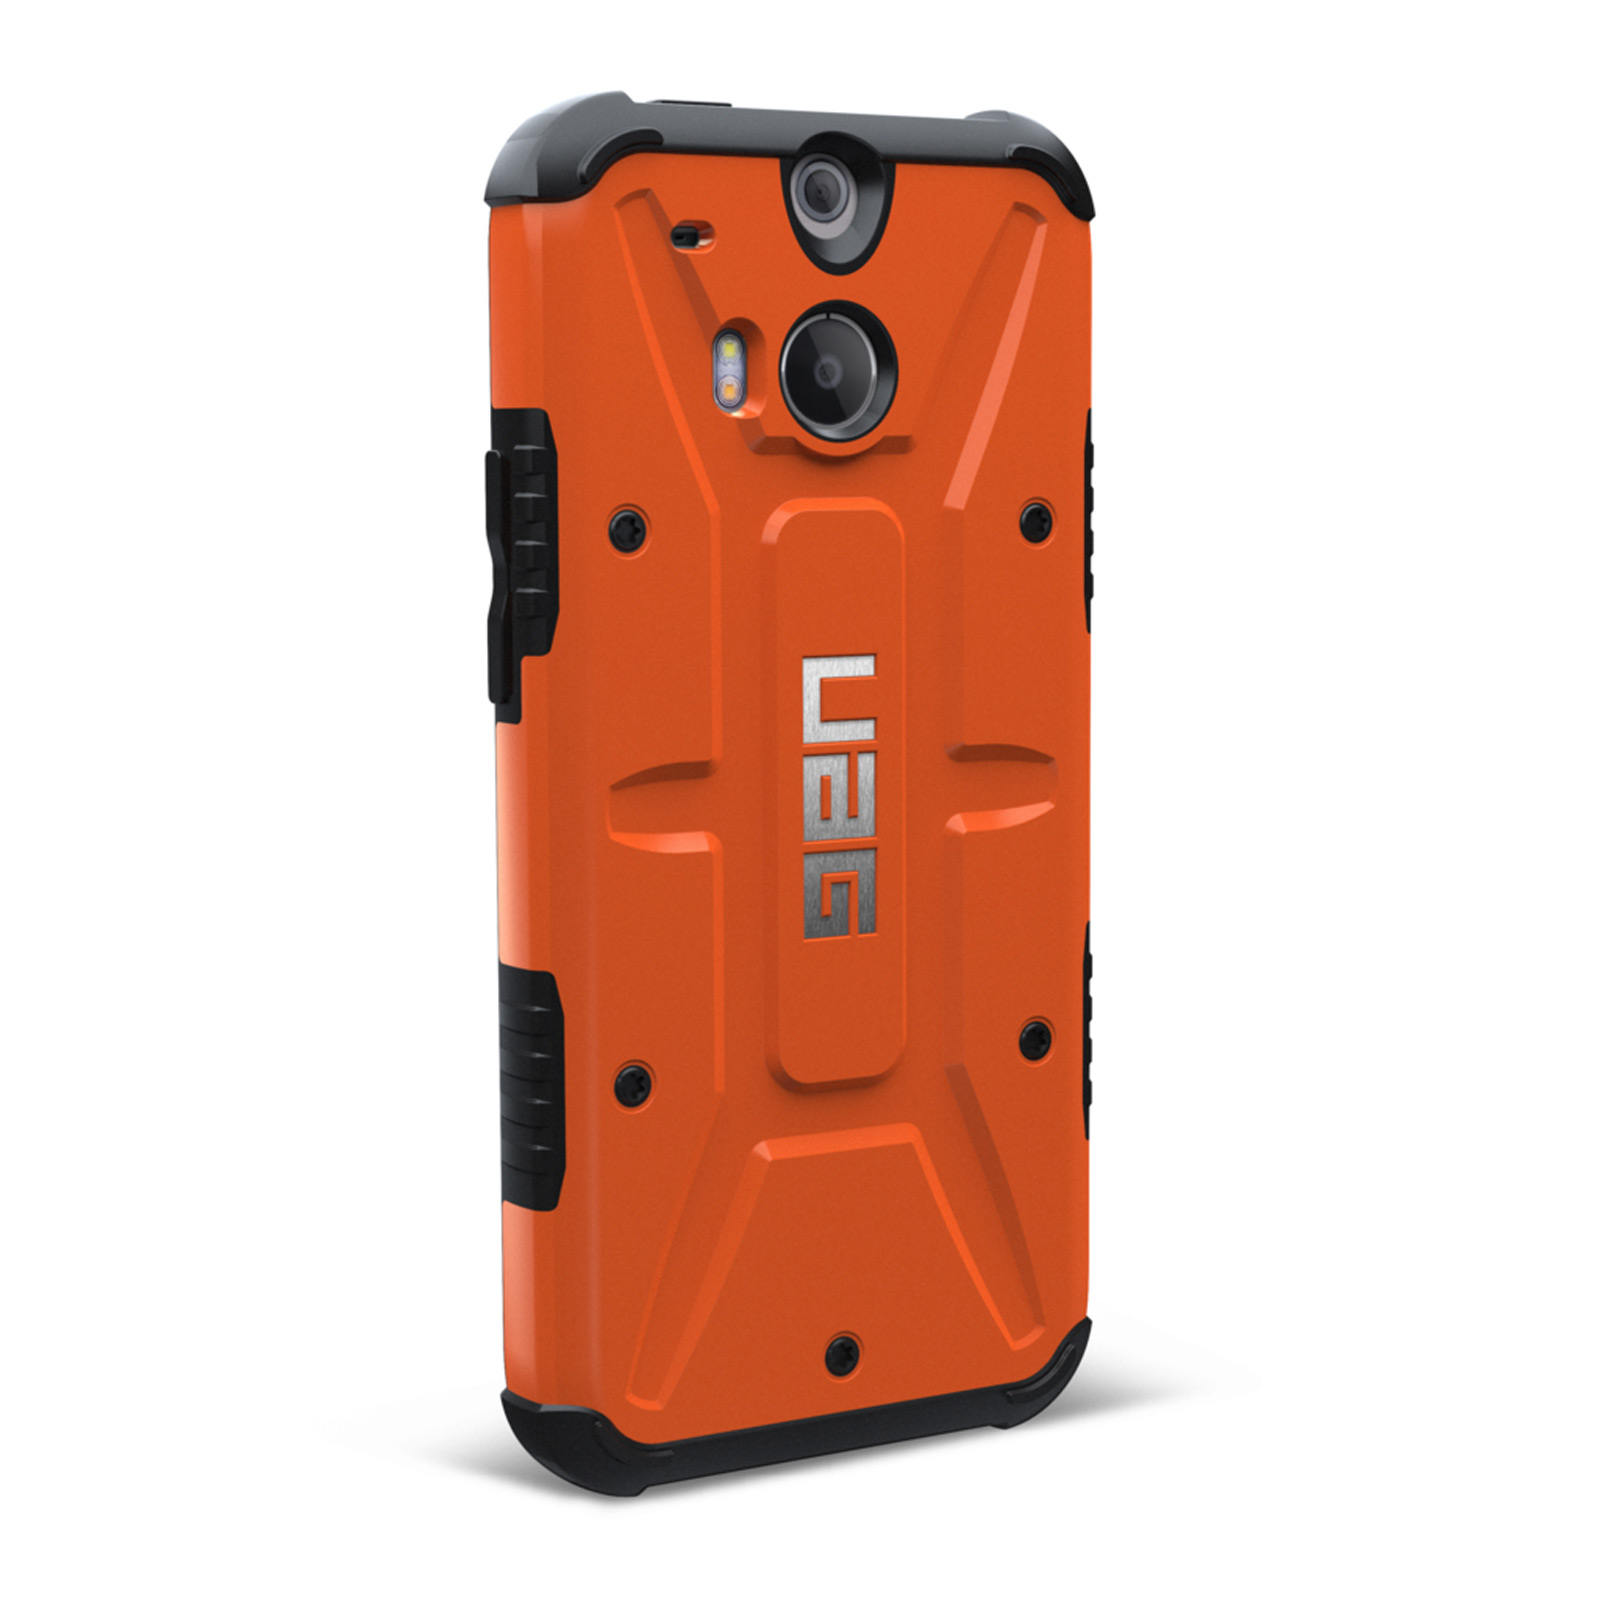 UAG HTC One M8 Composite Case - Outland - Rust/Black